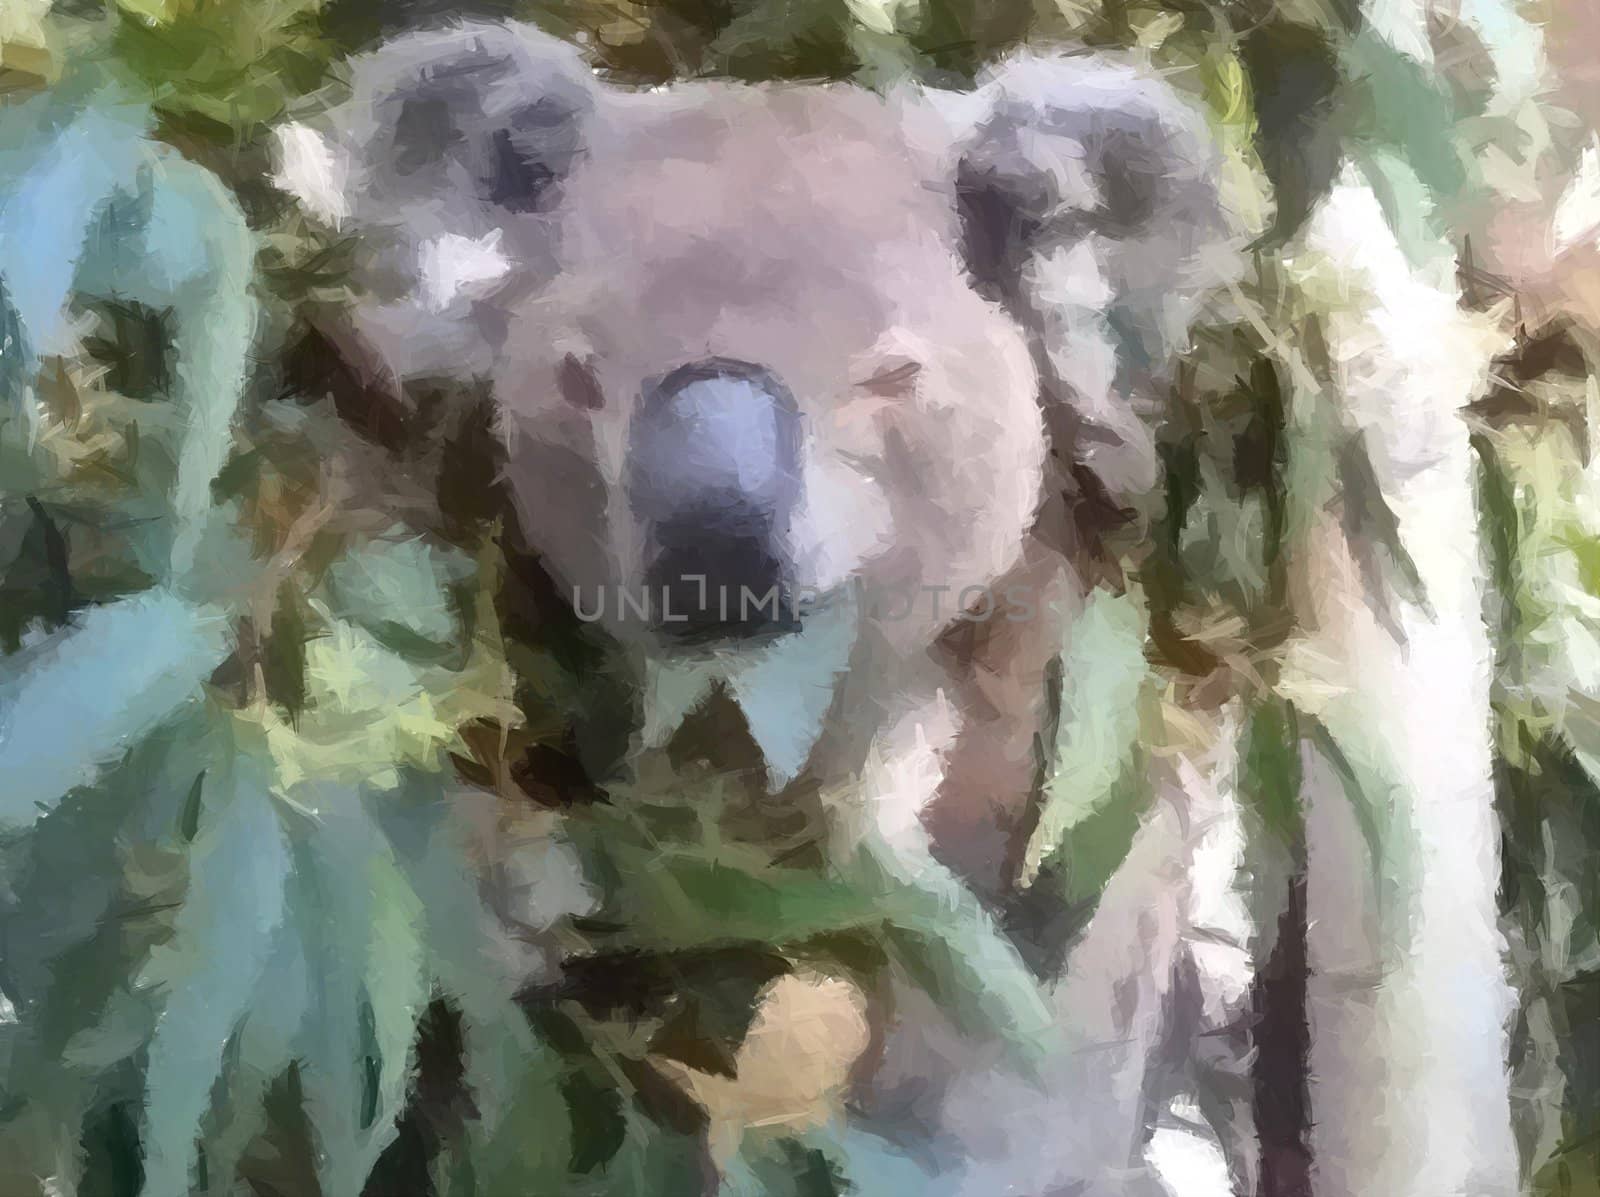 Koala sitting in a tree eating leaves.